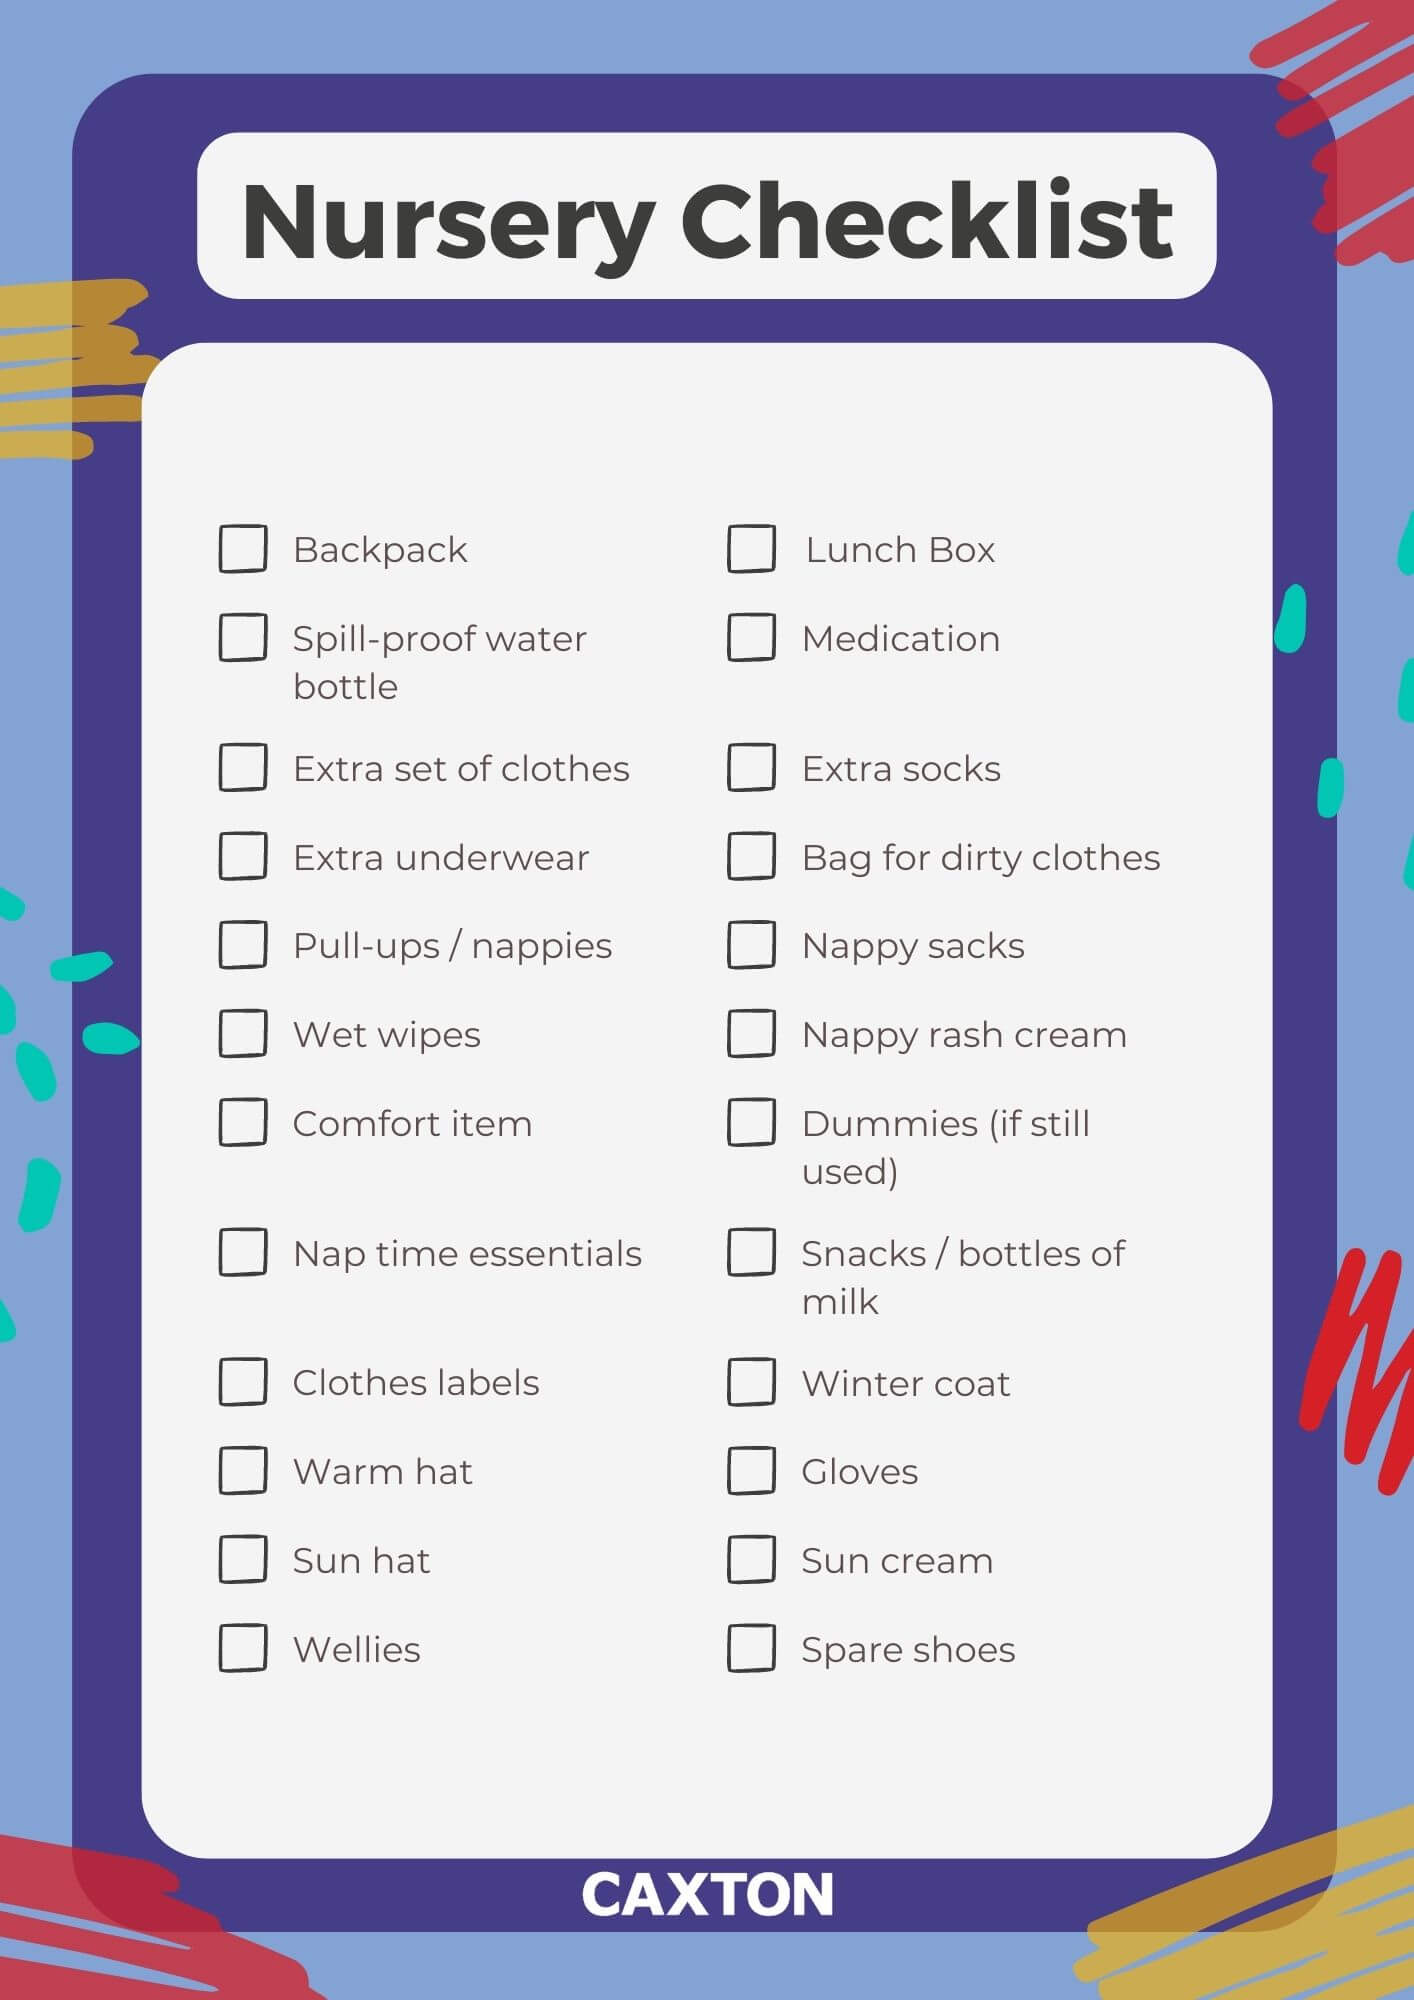 caxton-nursery-back-to-school-checklist-ultimate-guide.jpg